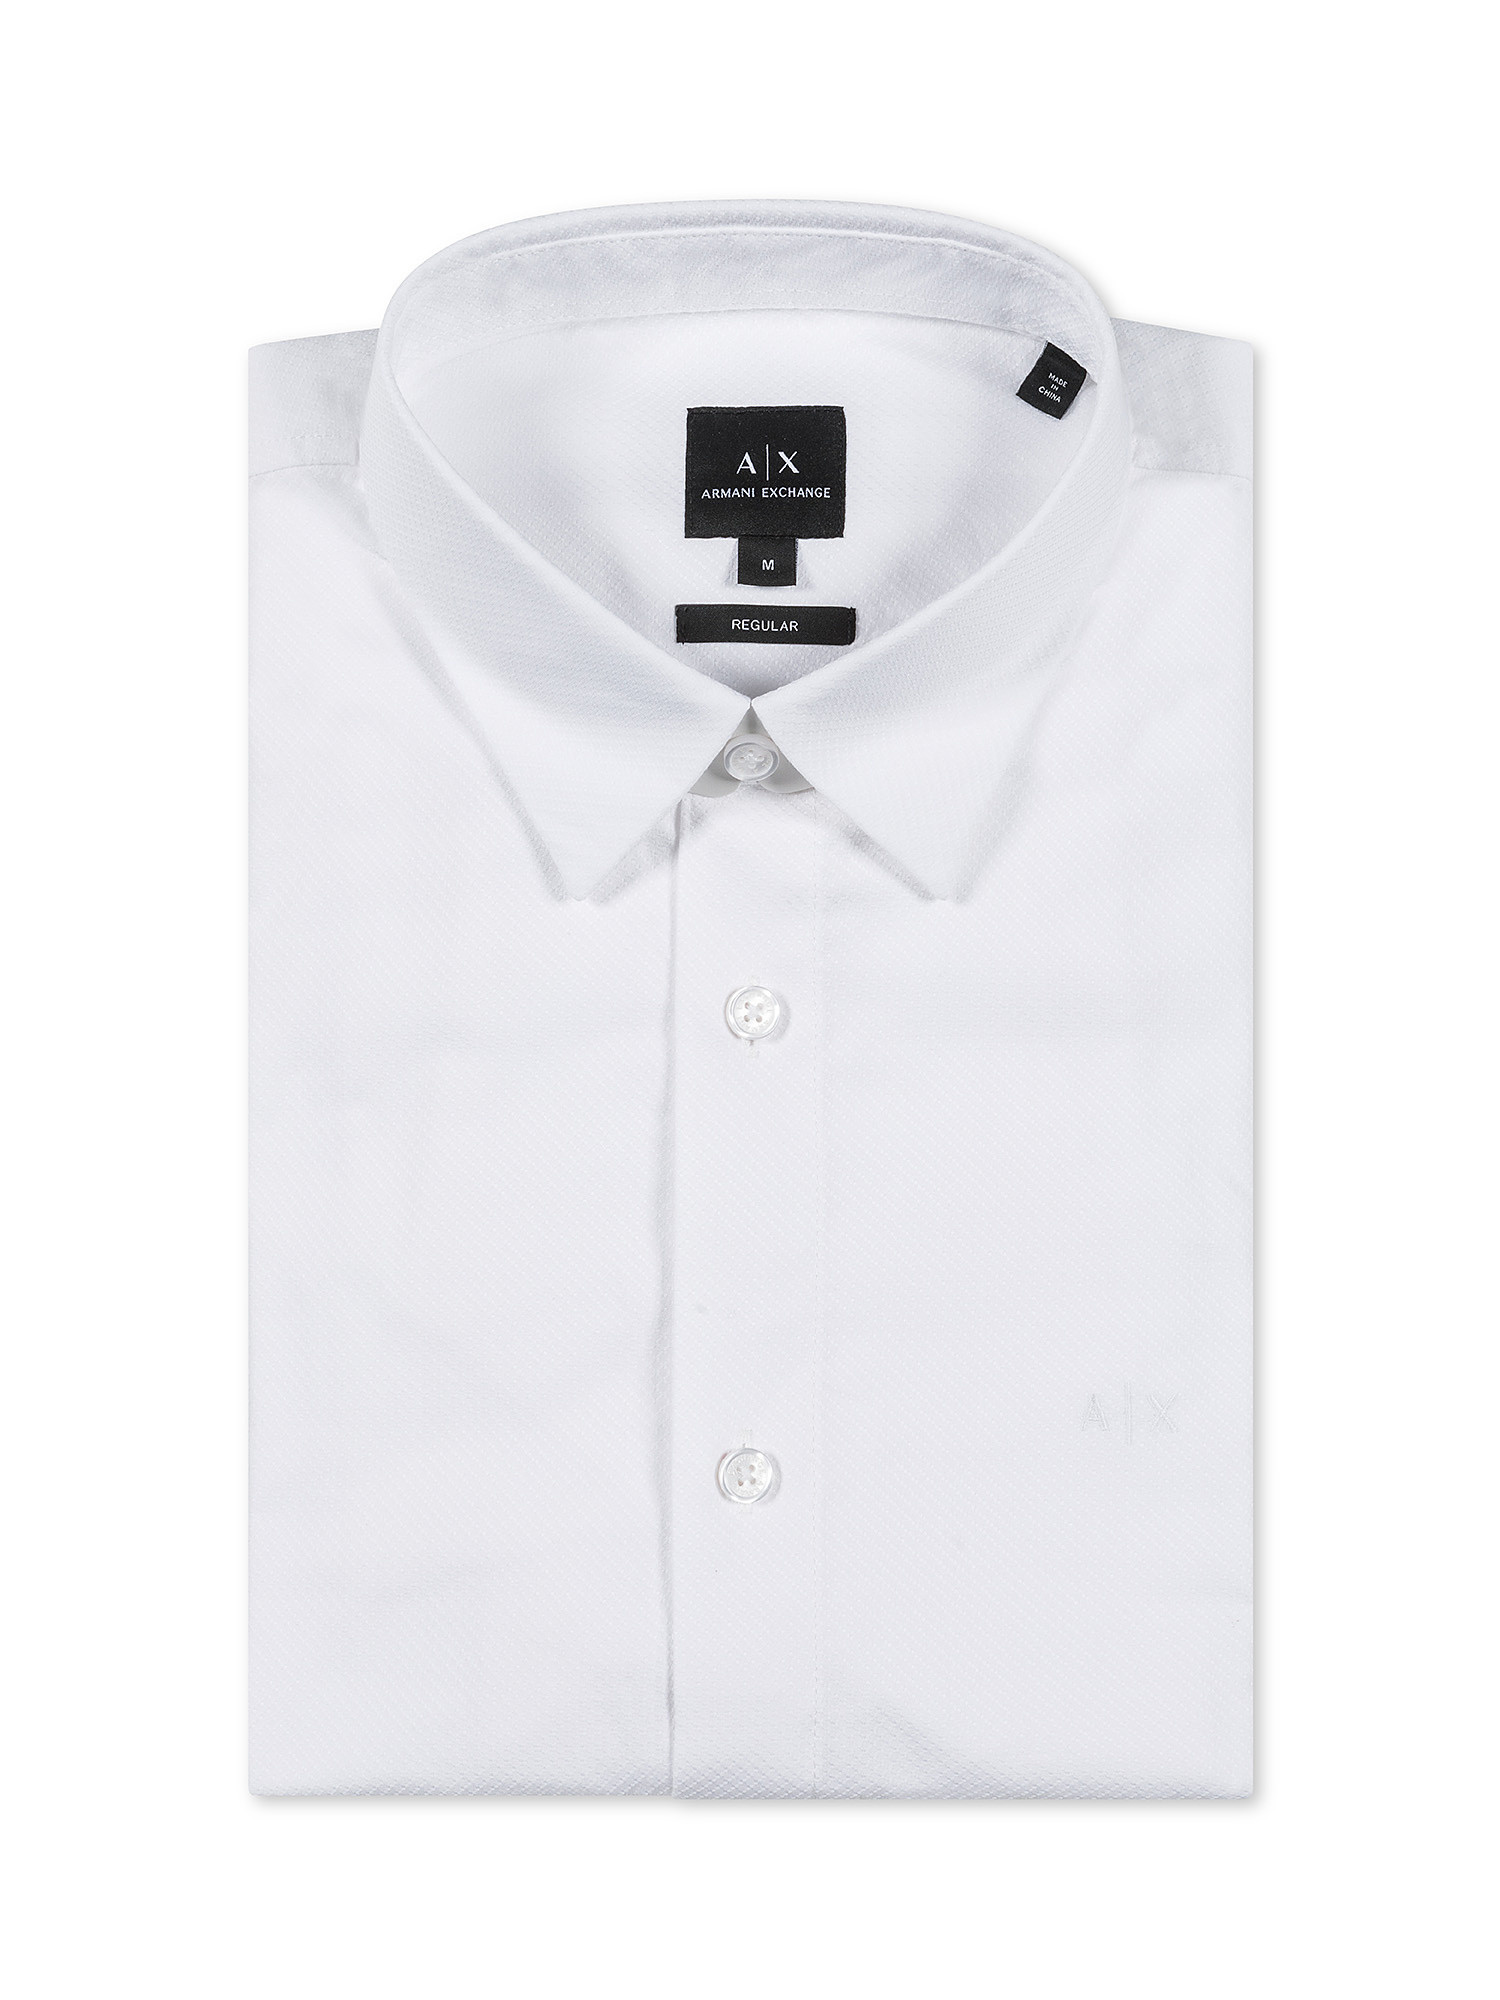 Armani Exchange - Regular fit shirt in cotton, White, large image number 0